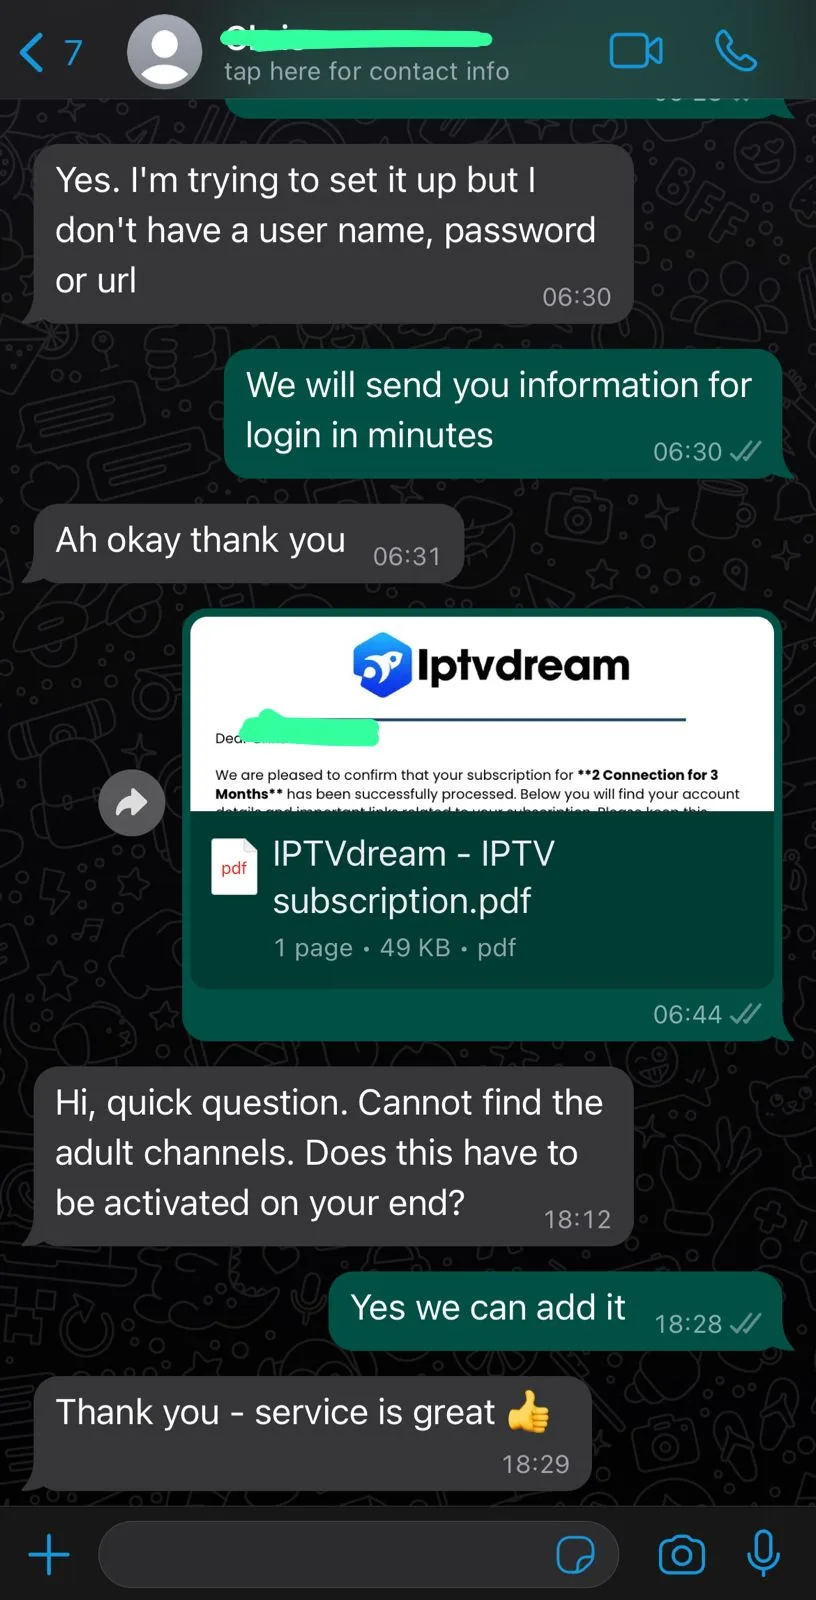 Screenshot: Customer Raves About IPTV Dream Service on WhatsApp